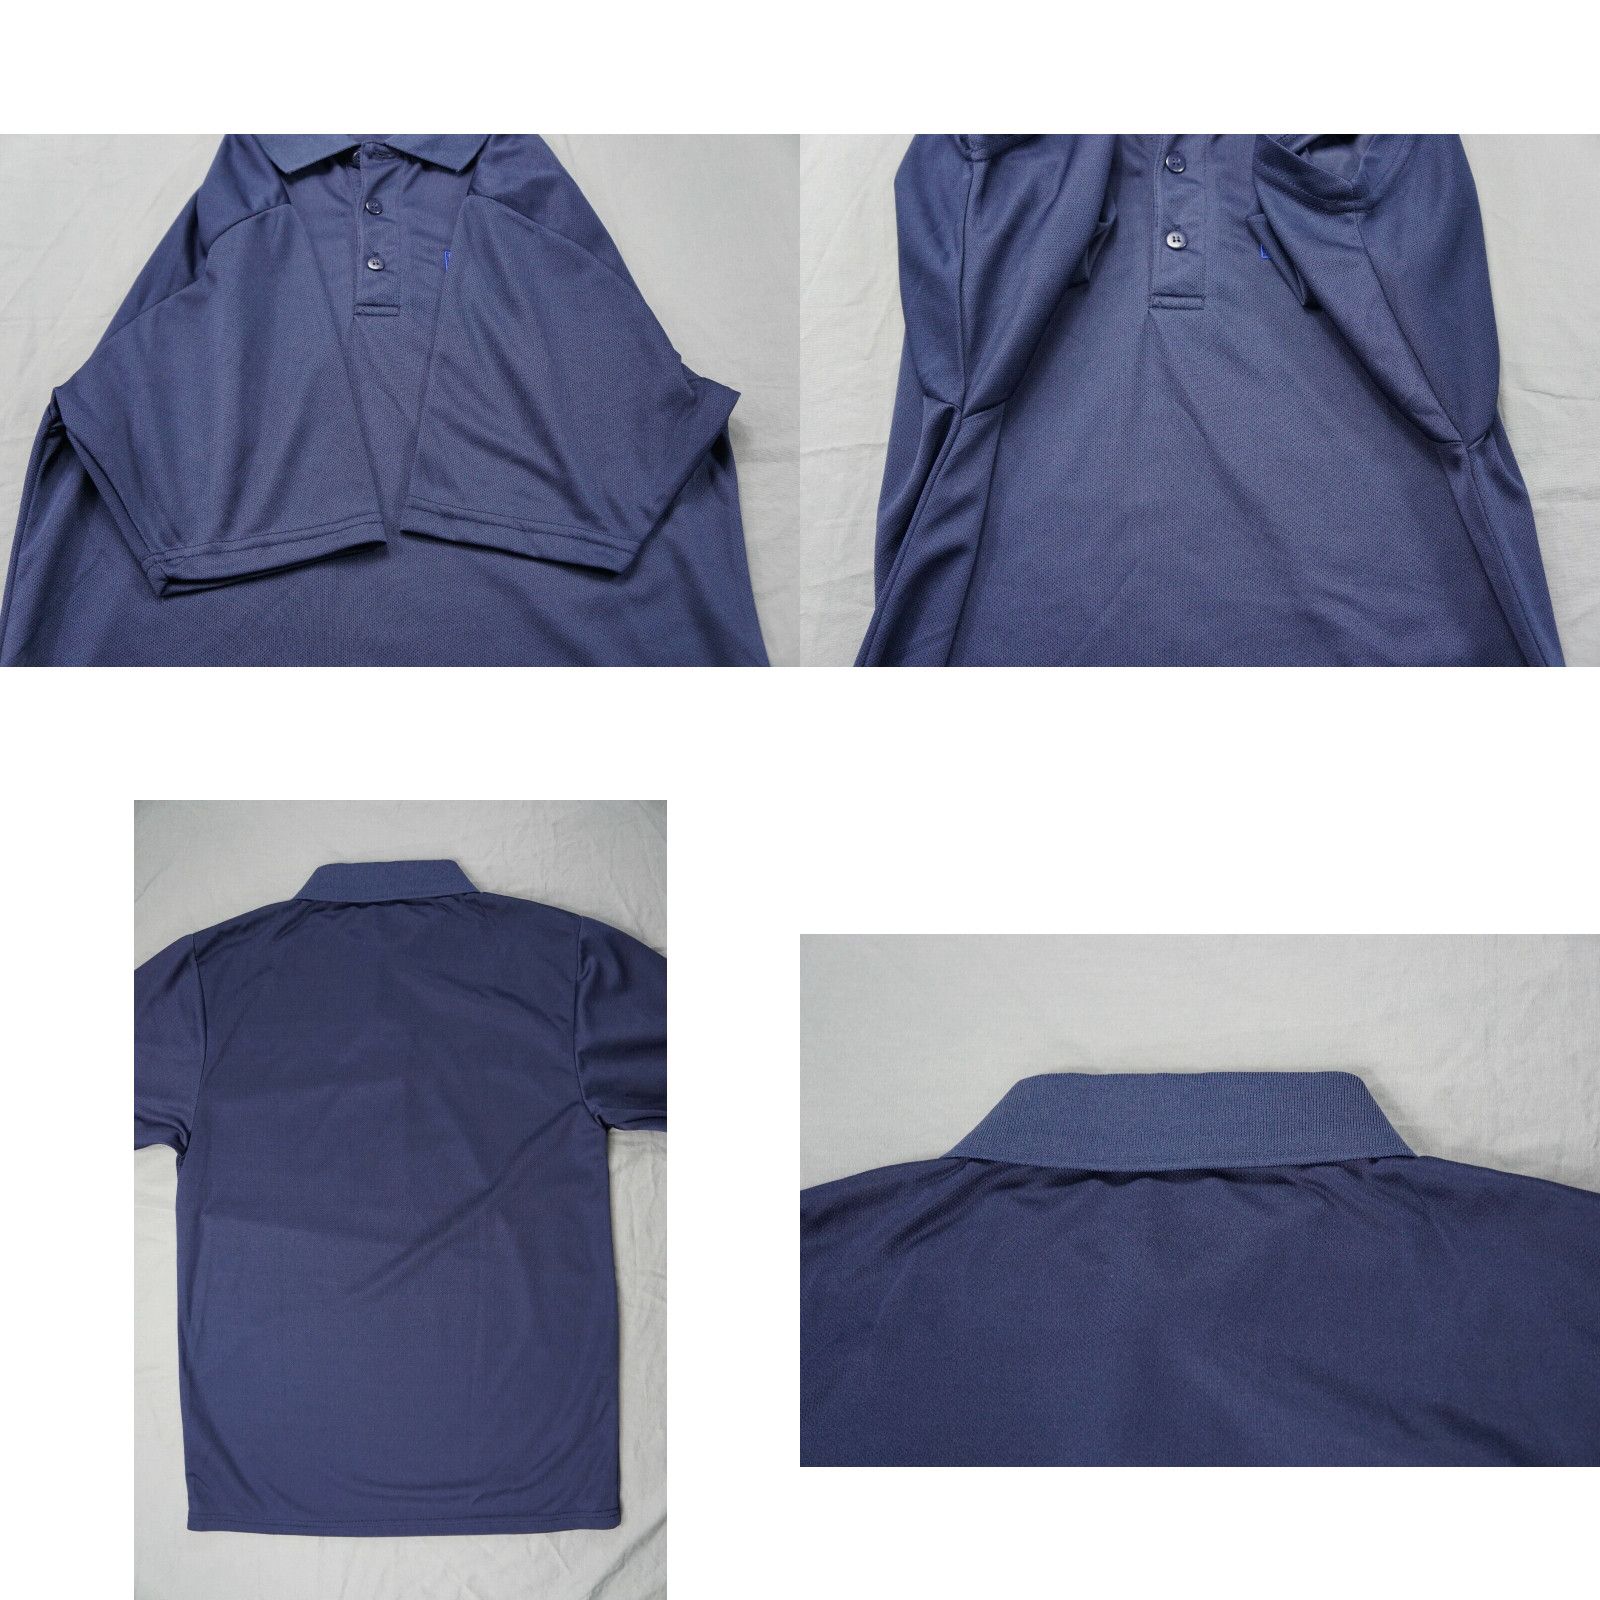 Dunbrooke Dunbrooke Premium Polo Golf Shirt. Zodiac Stitched. Navy Blue, Men's S. EUC!! Size US S / EU 44-46 / 1 - 4 Preview